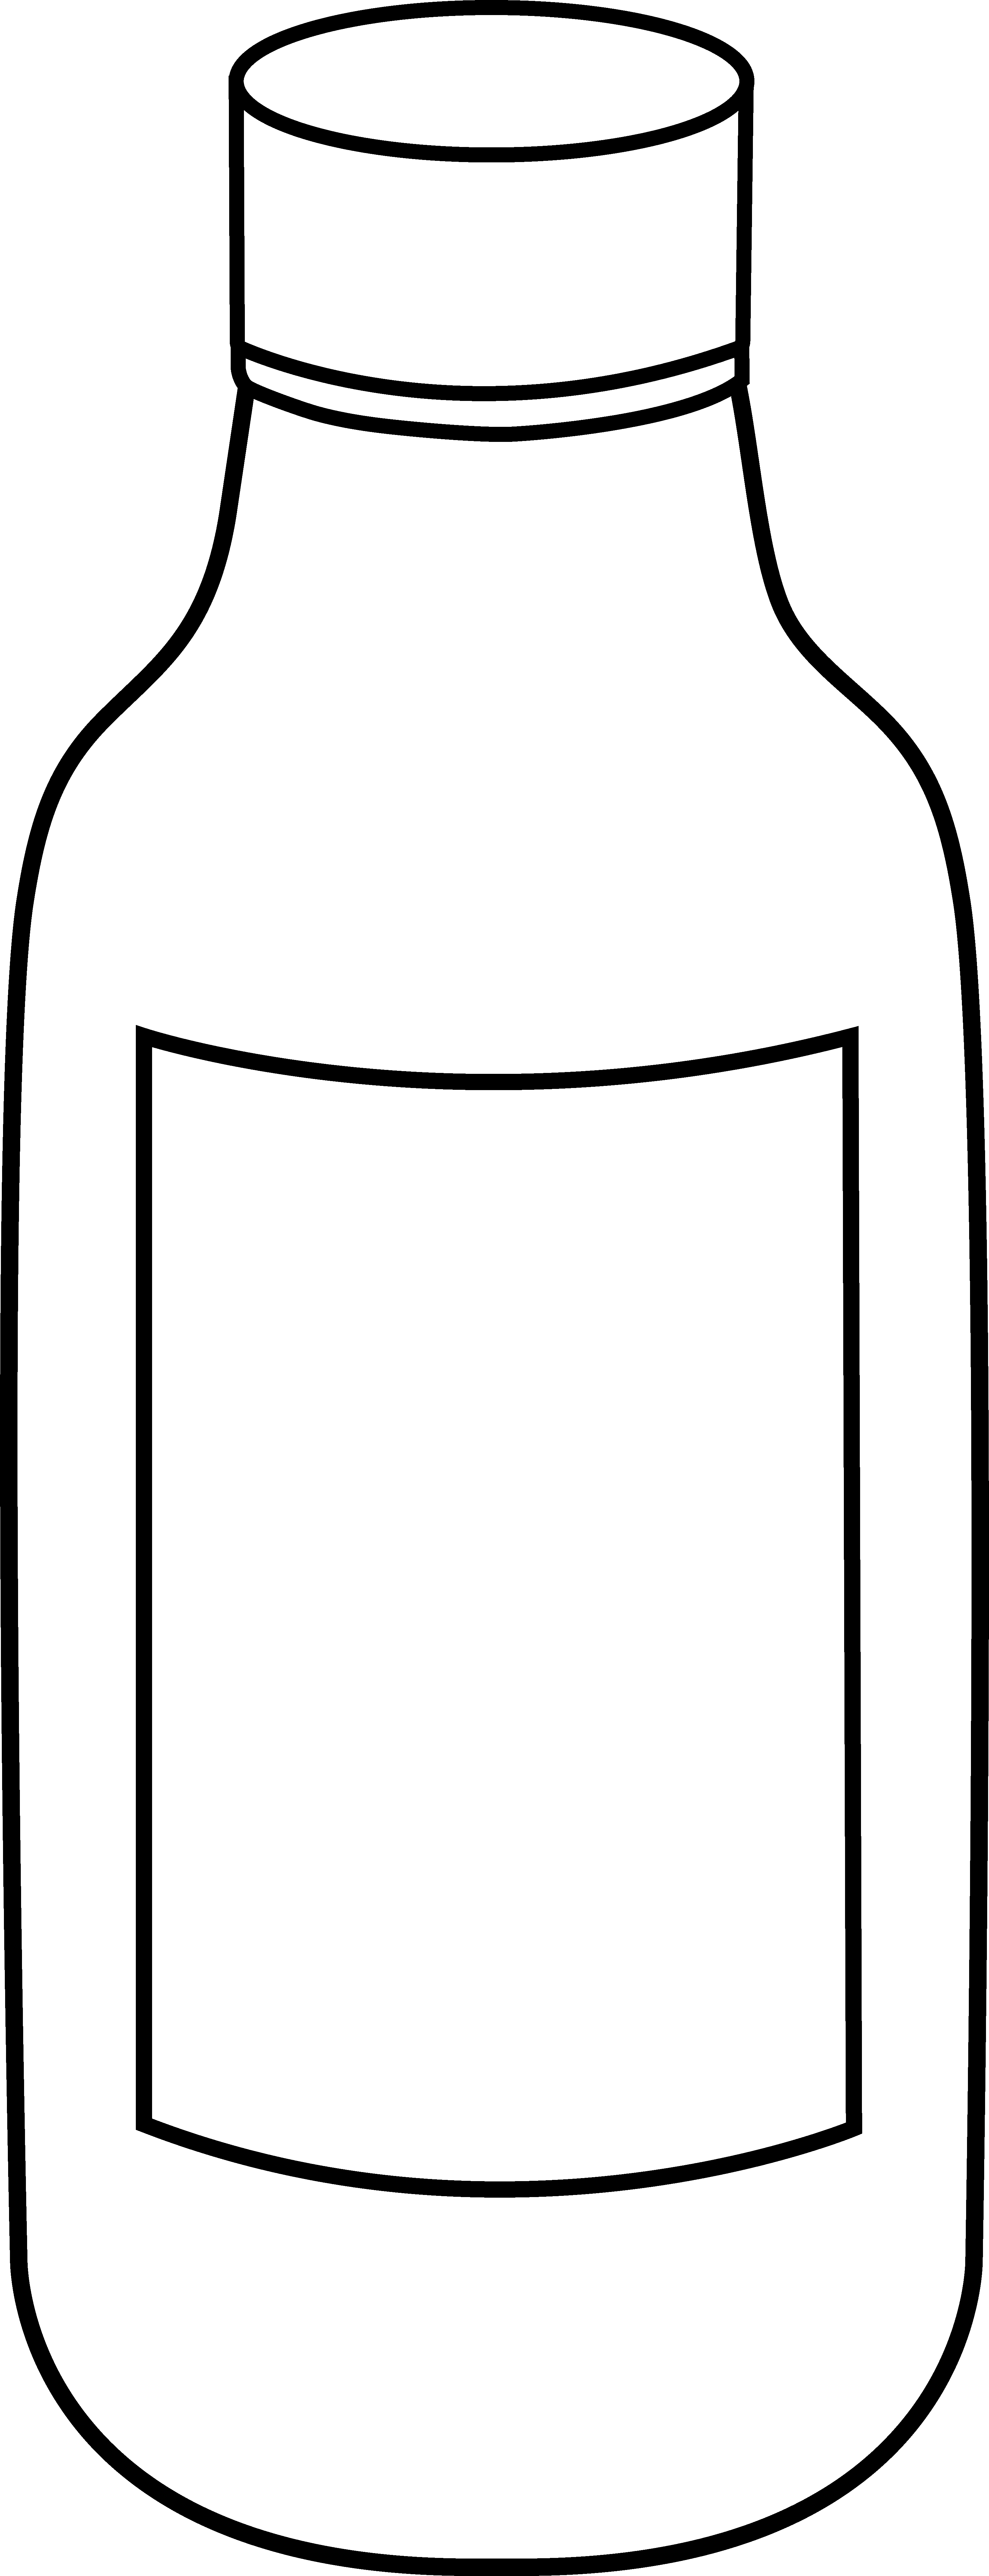 Cup clipart telephone. Pill bottle desktop backgrounds